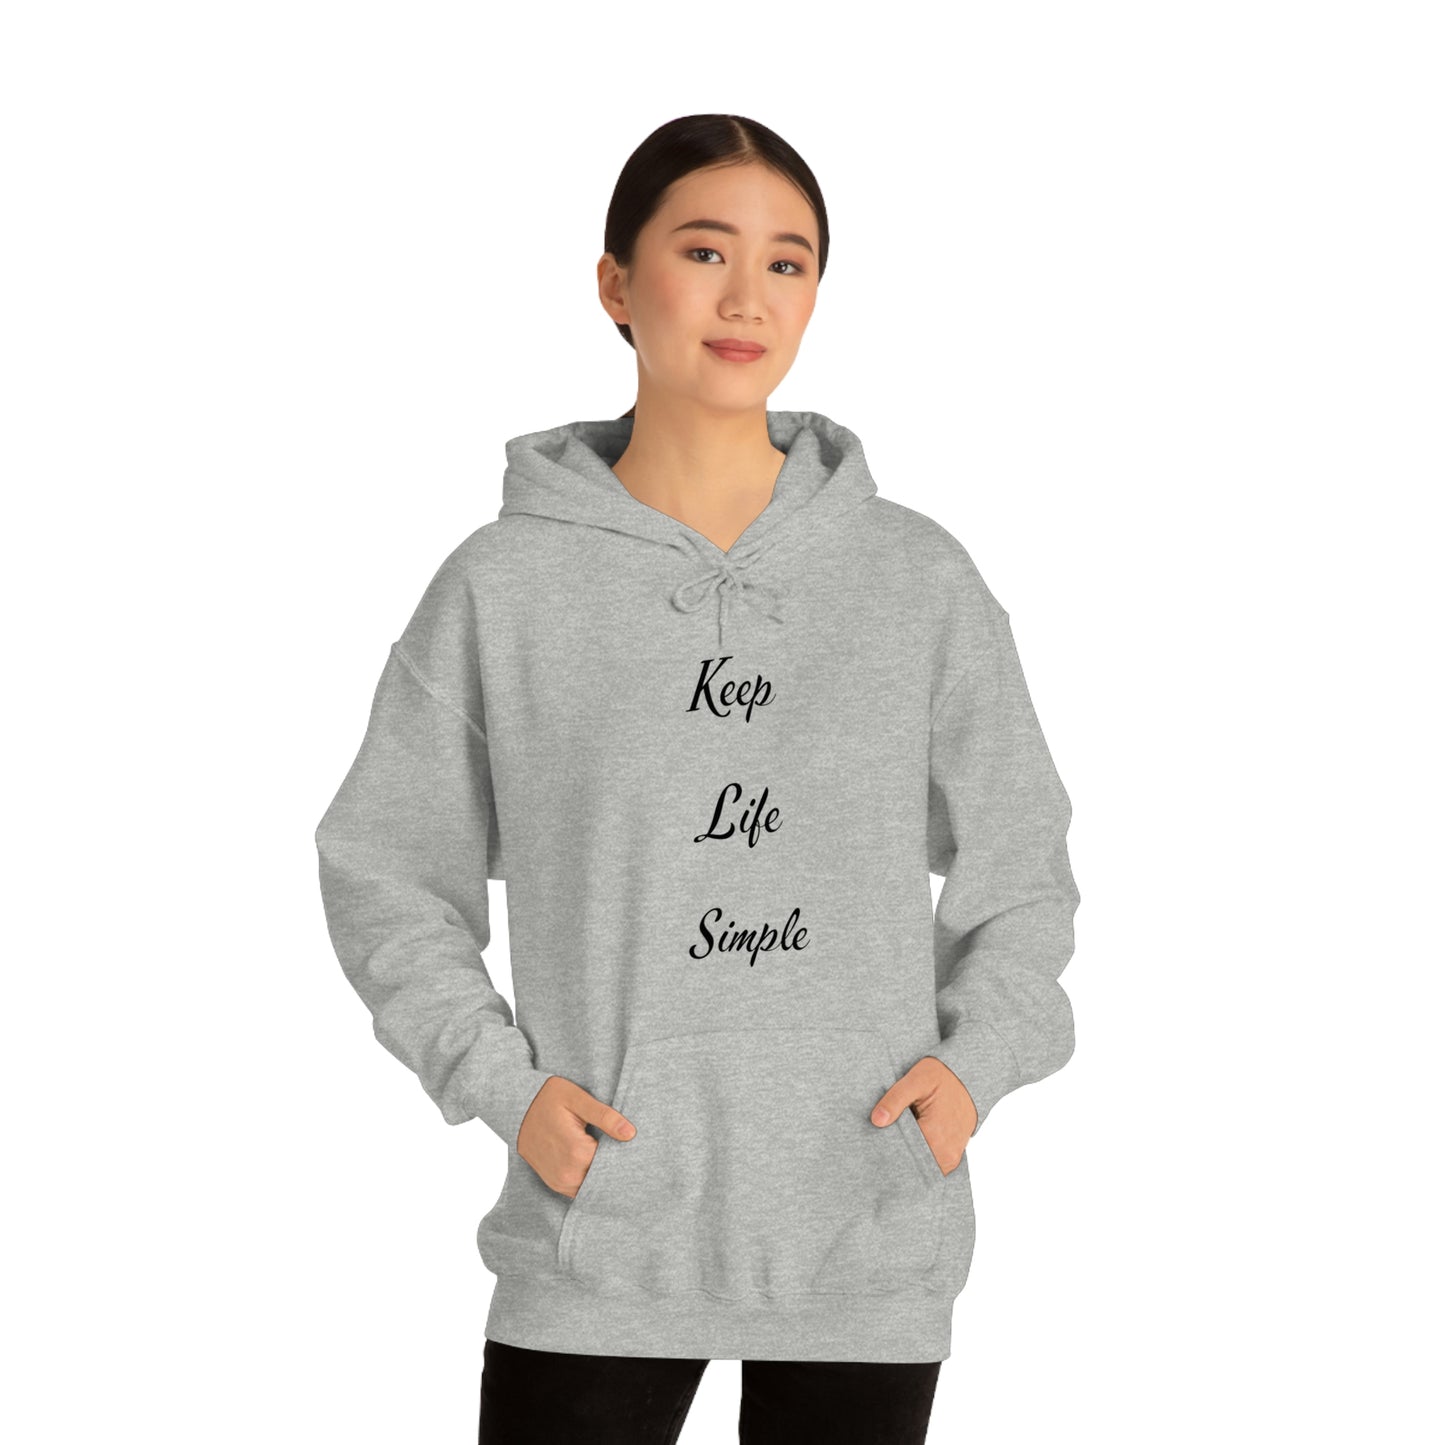 Keep Life Simple Hooded Sweatshirt